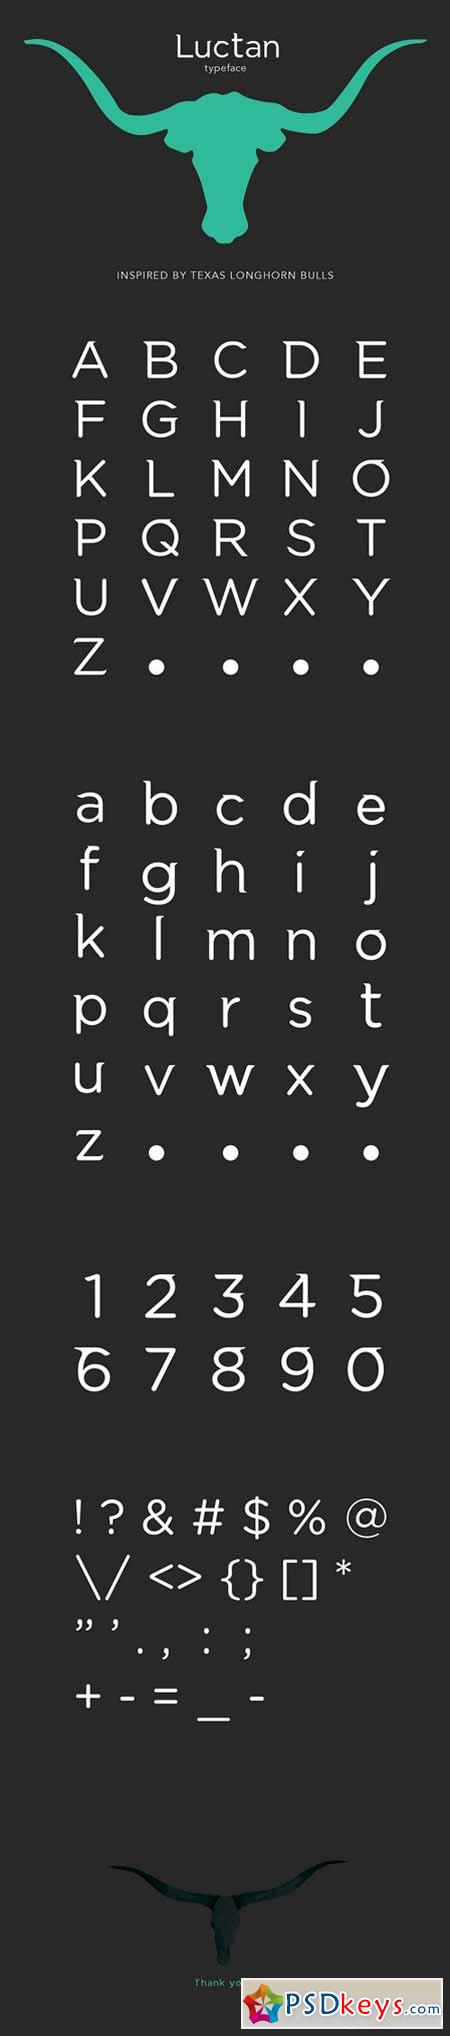 Luctan Typeface